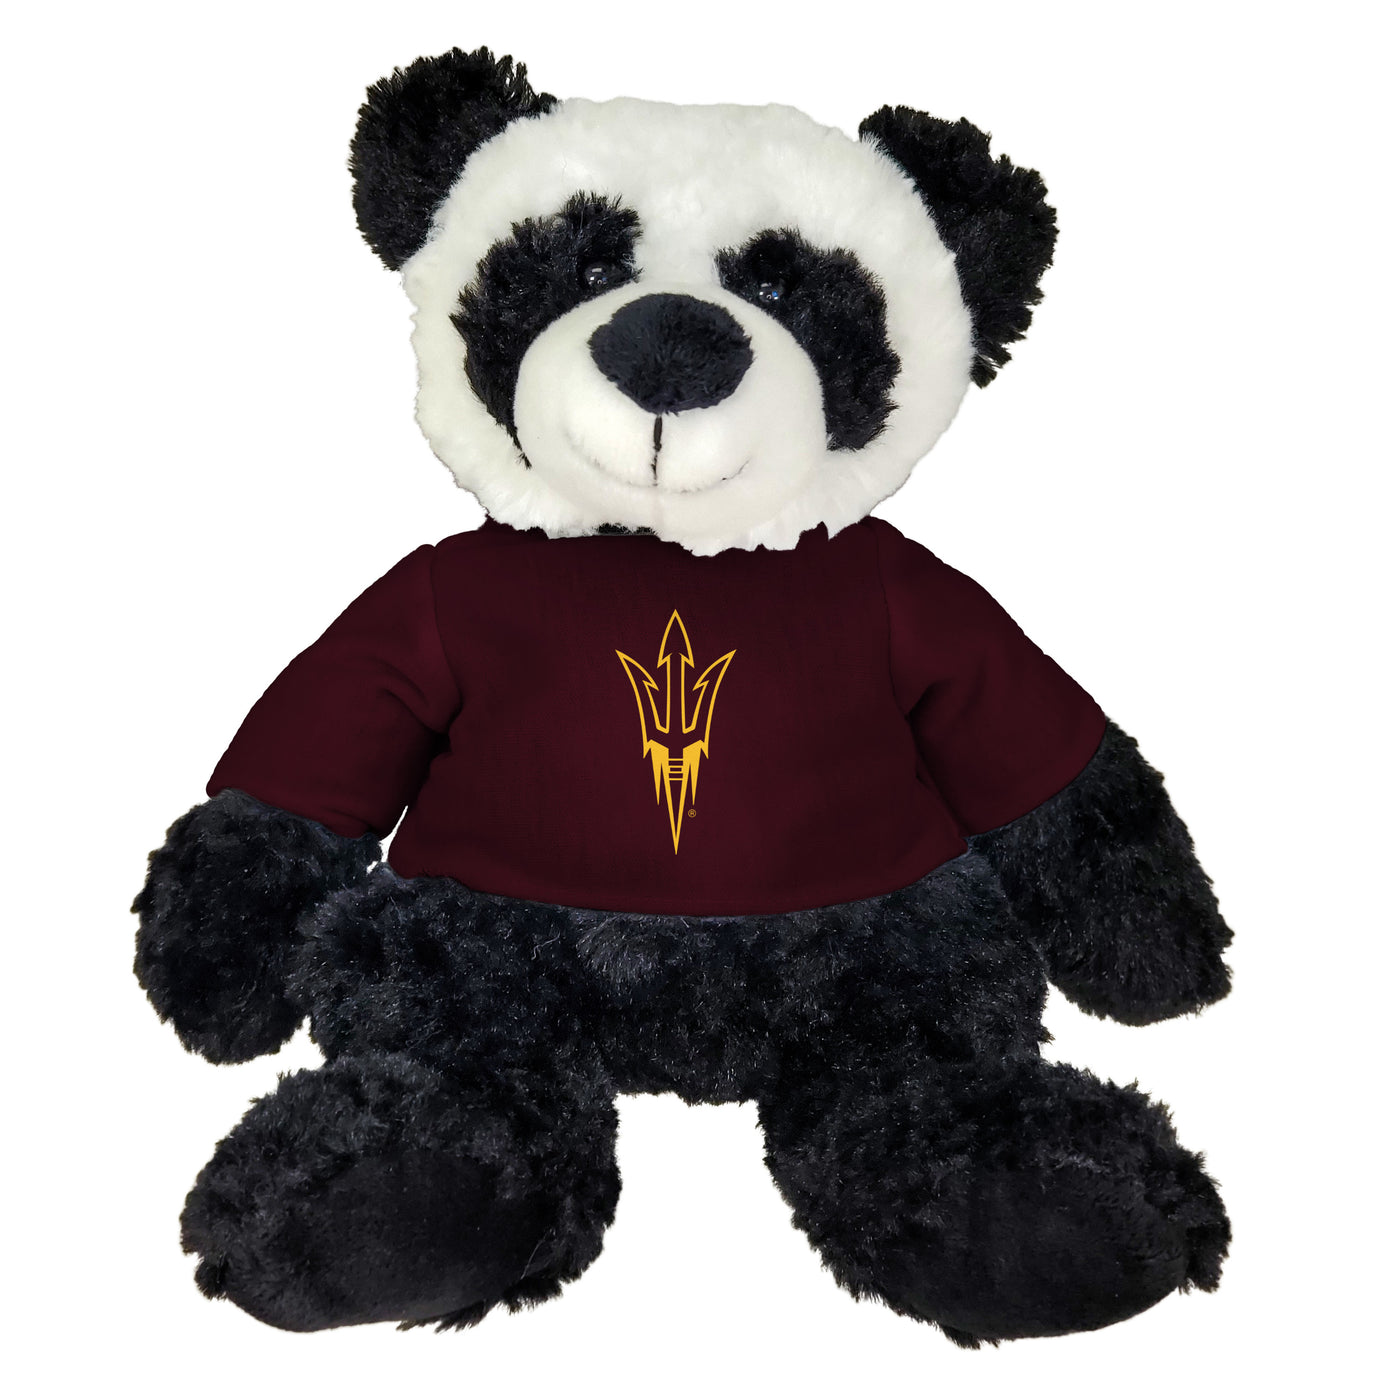 ASU Stuffed black and white panda wearing a maroon shirt with the pitchfork logo. 